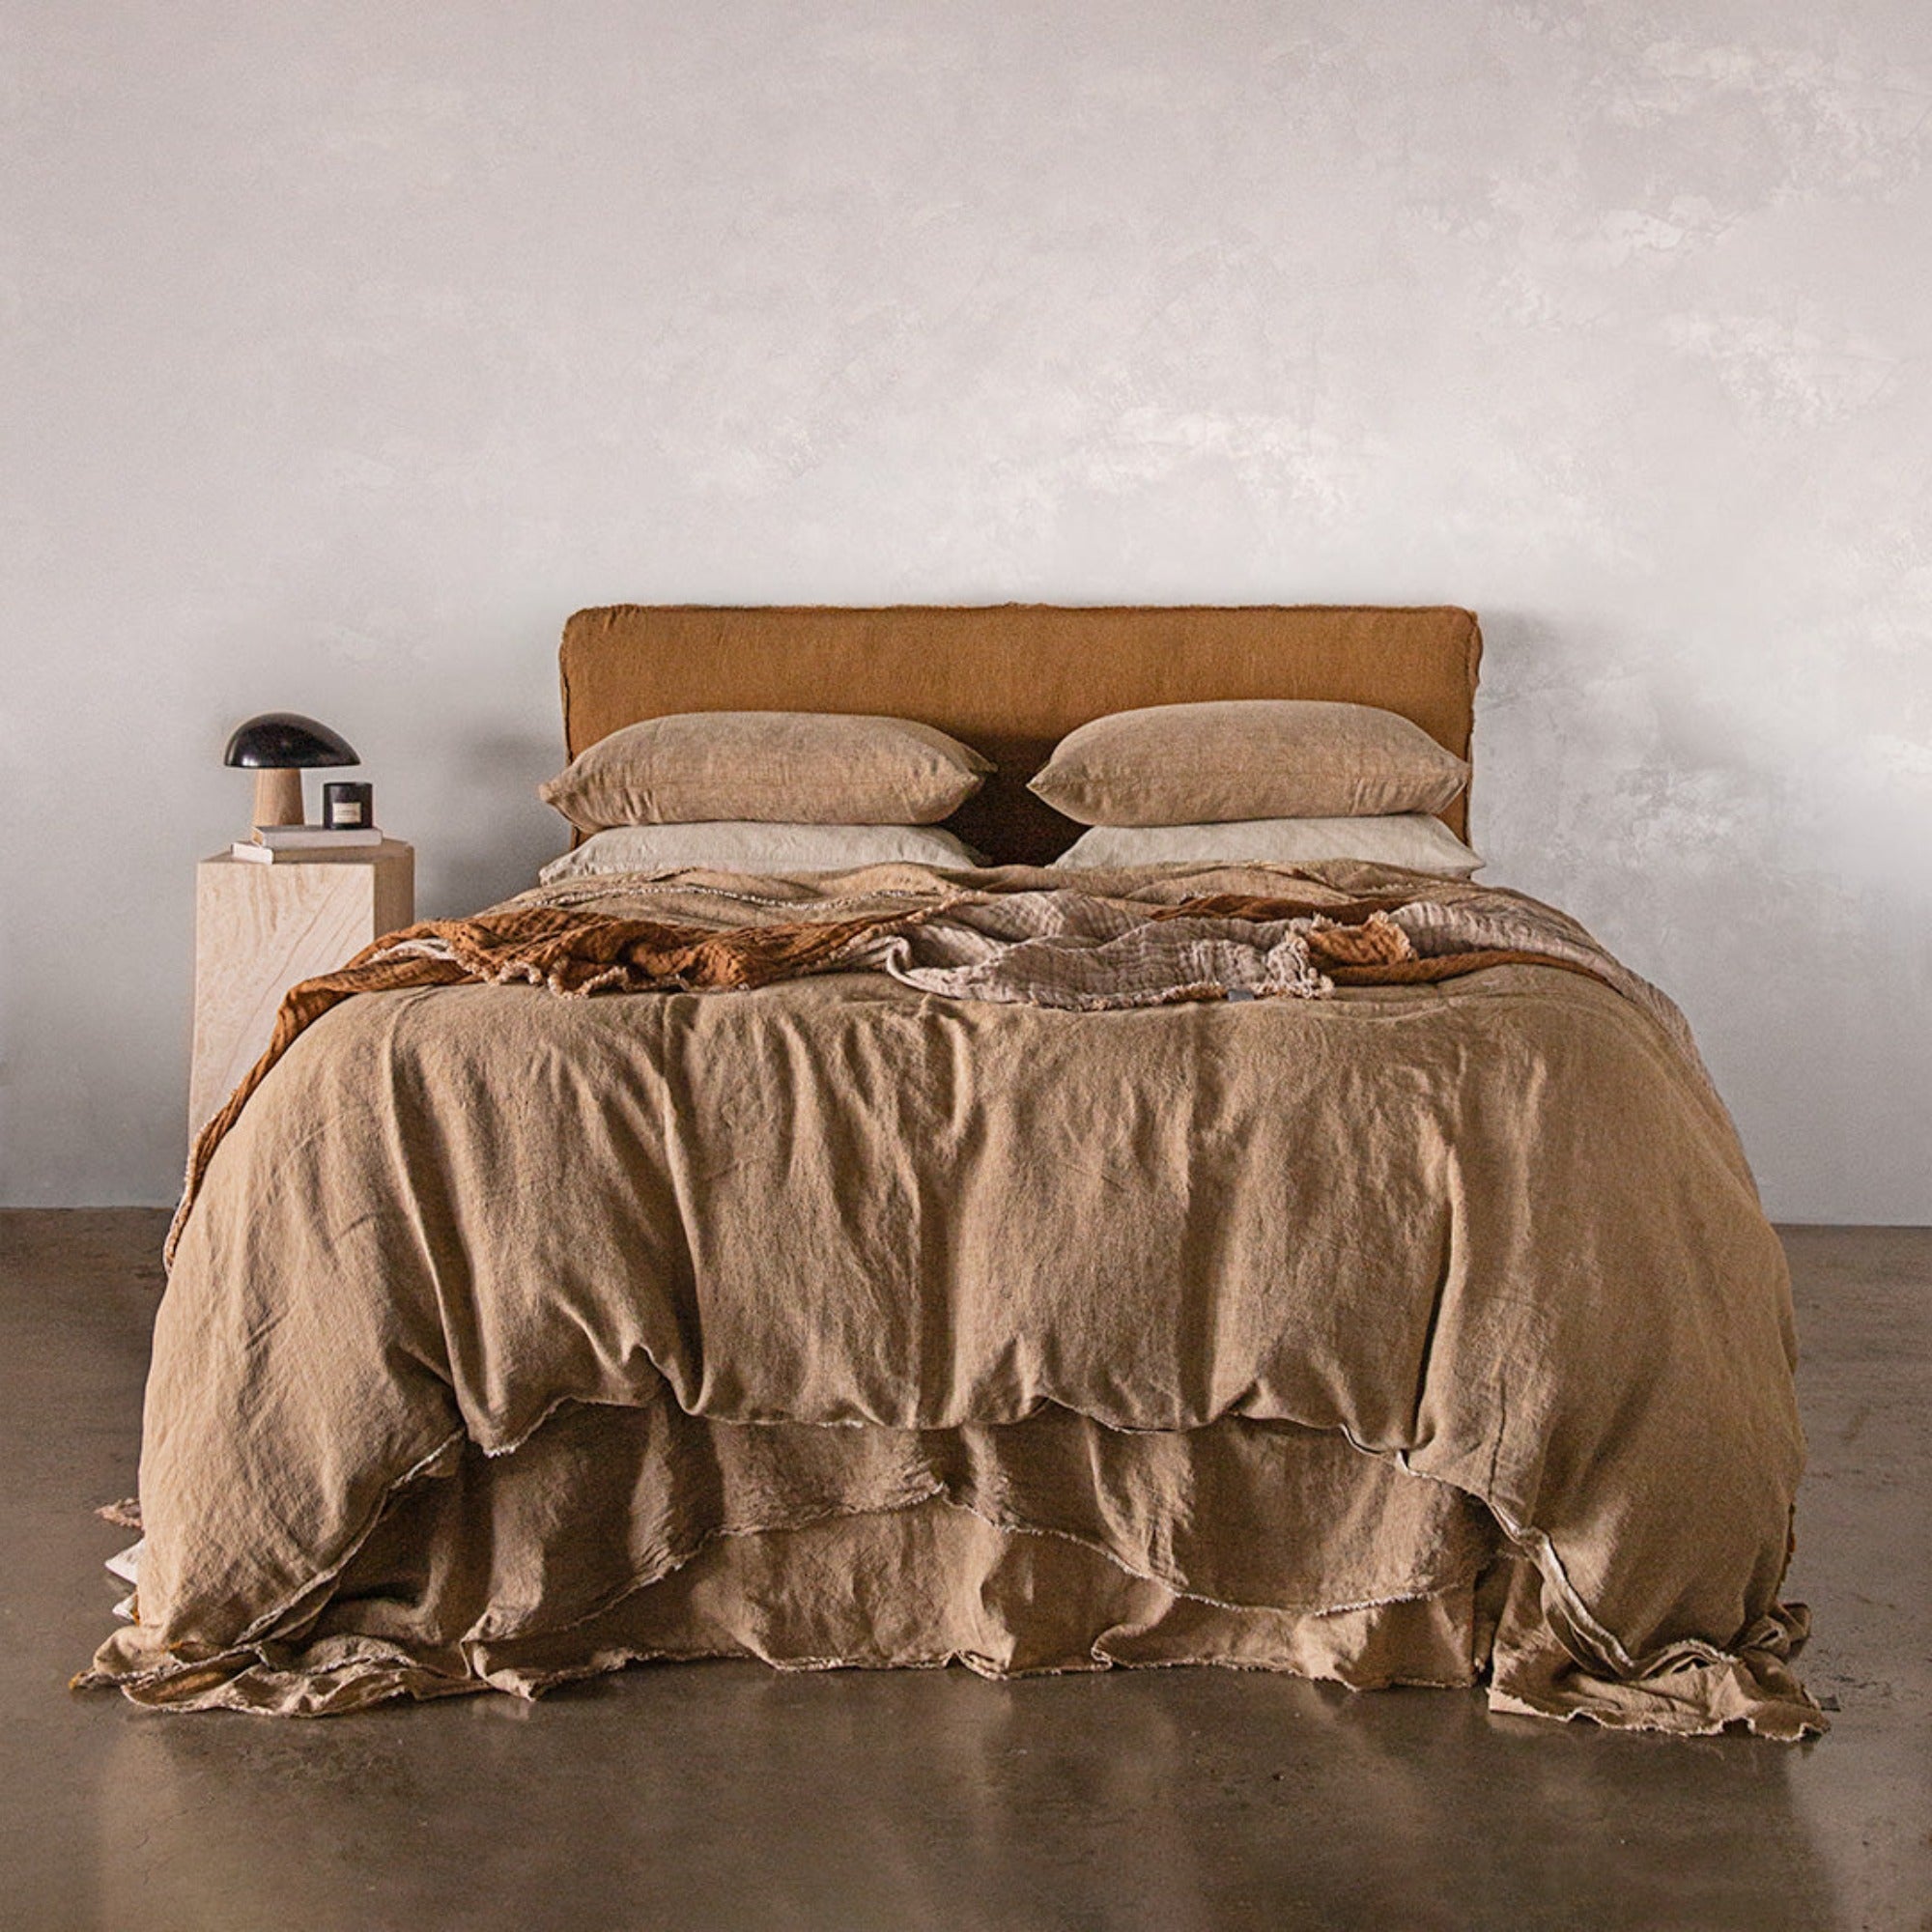 Basix Linen Pillowcase | Sandy Color | Hale Mercantile Co.